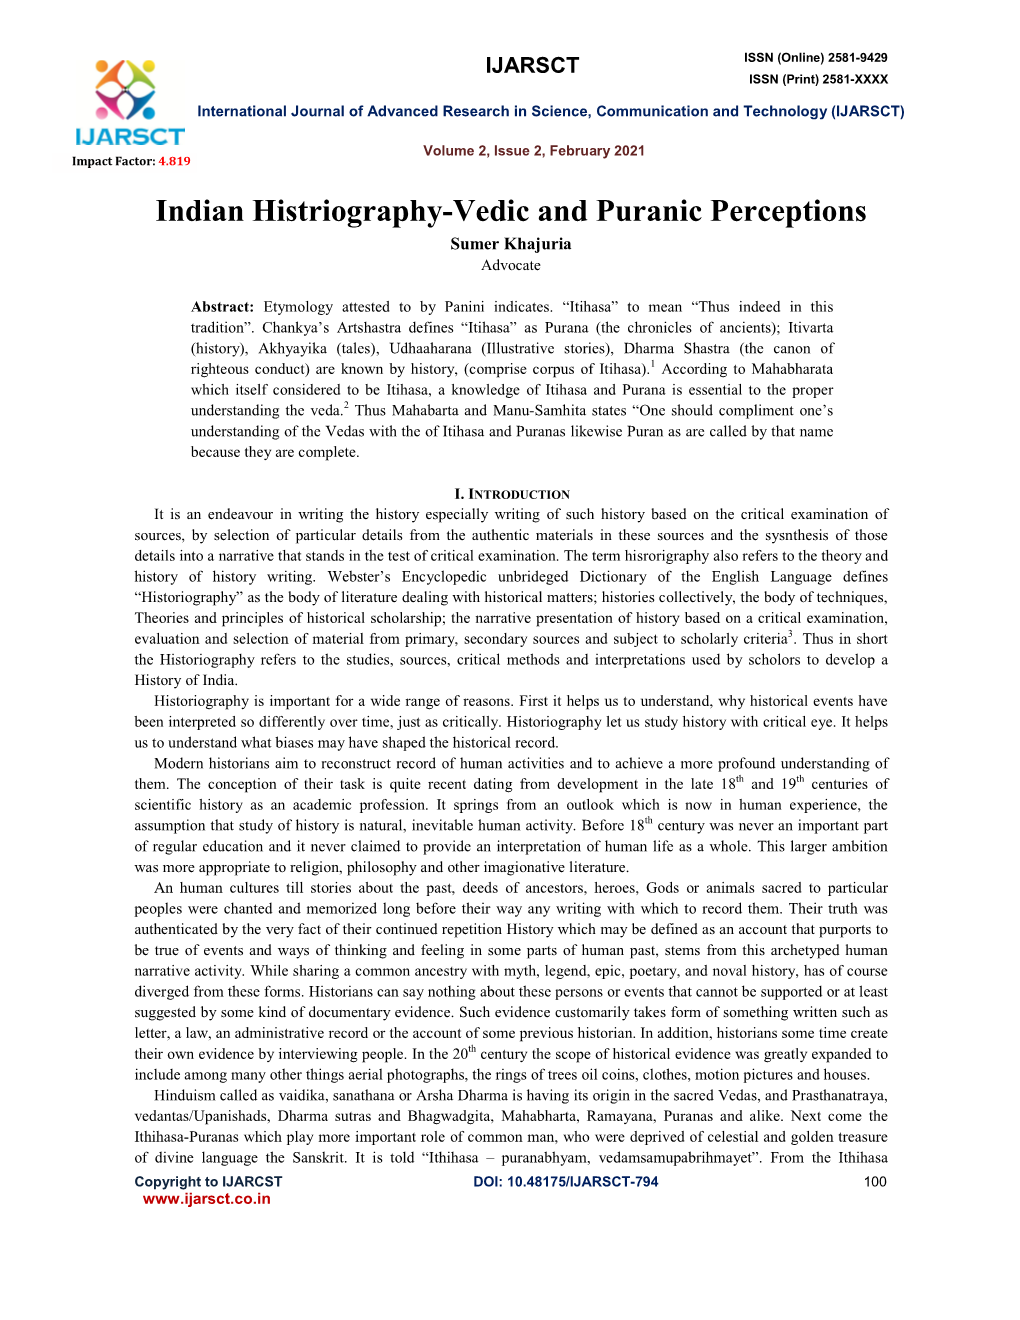 Indian Histriography-Vedic and Puranic Perceptions Sumer Khajuria Advocate